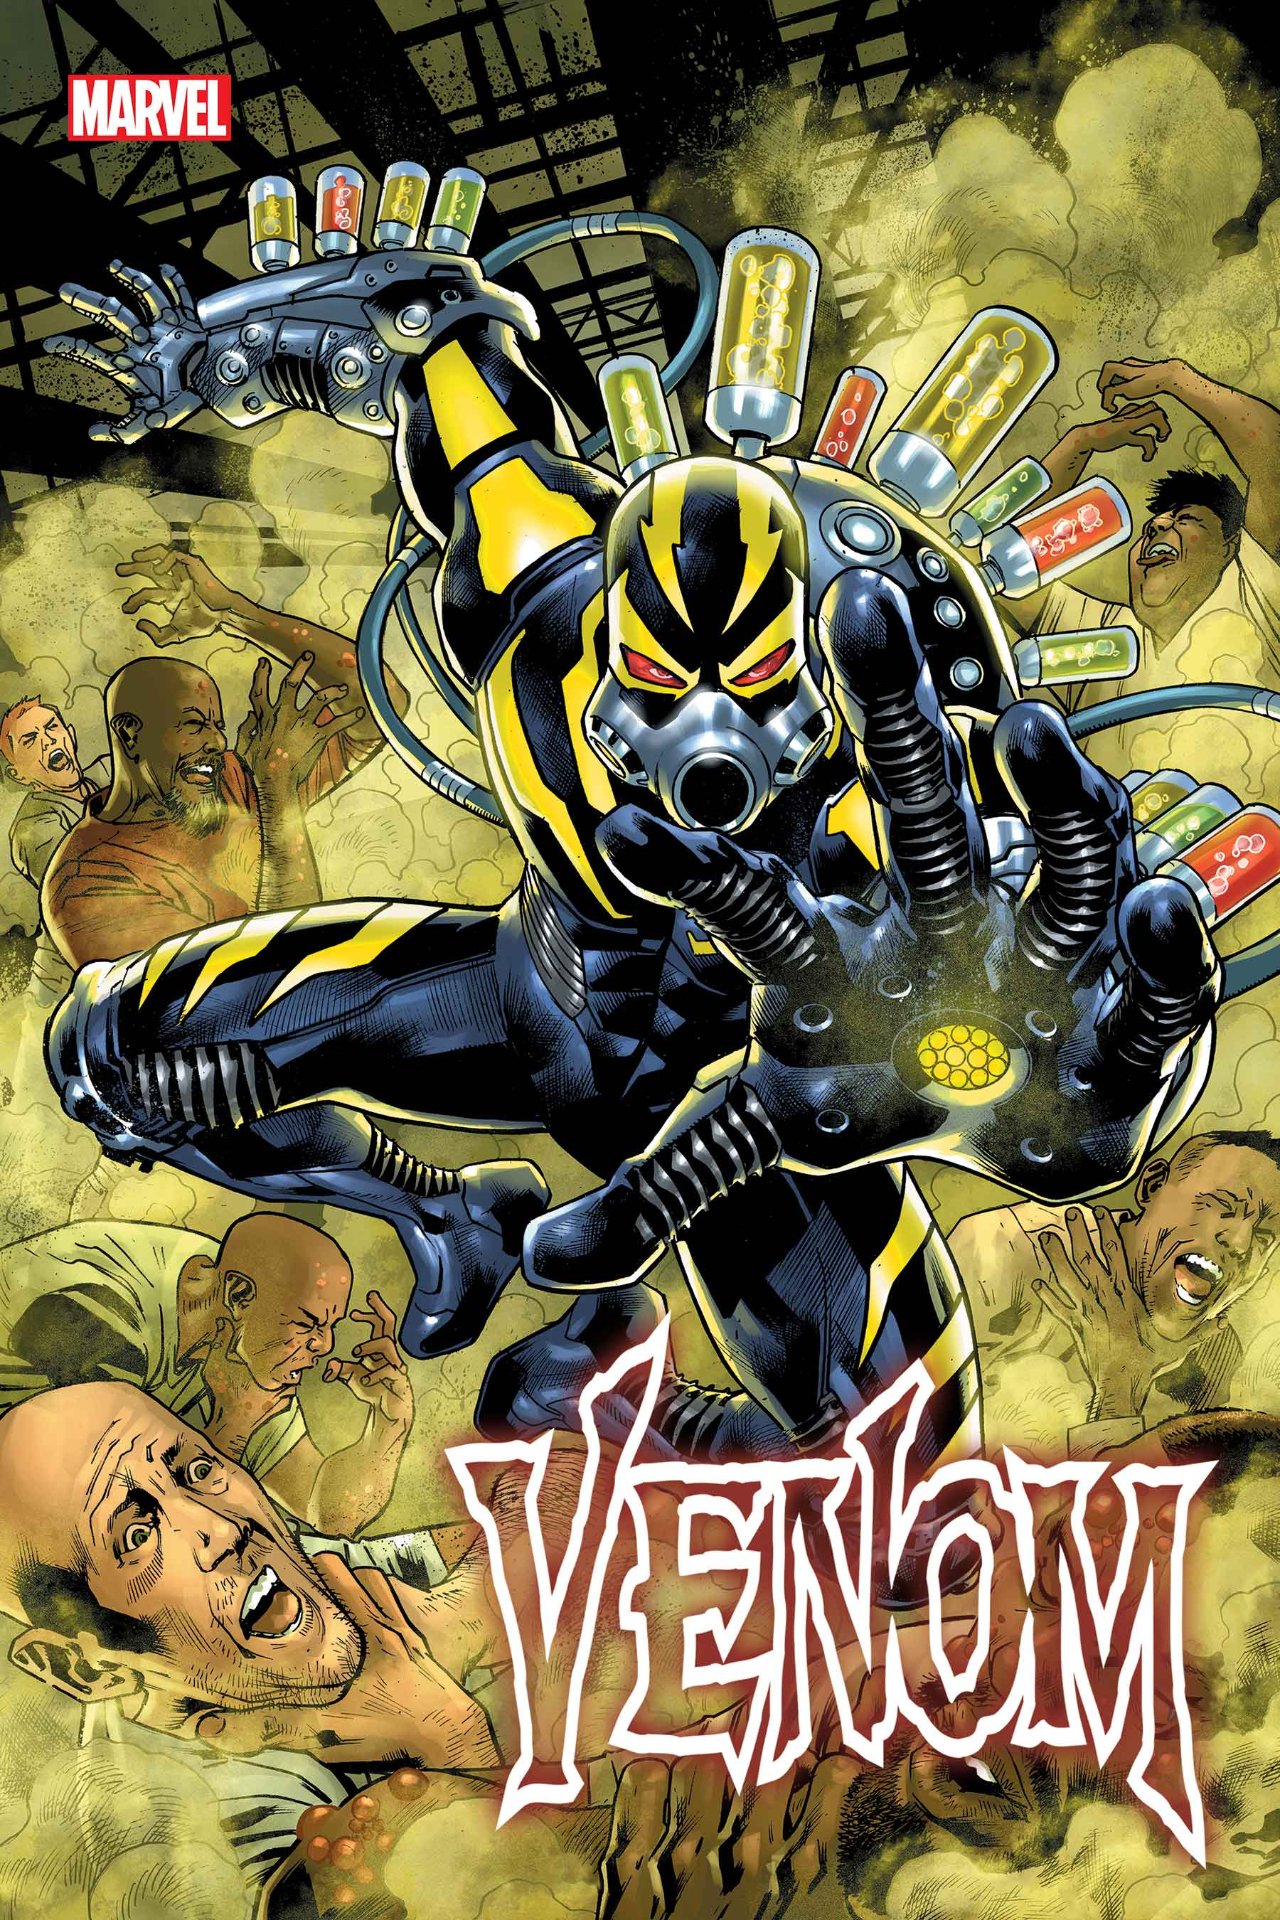 Sleeper Agent on the cover of Venom # 11